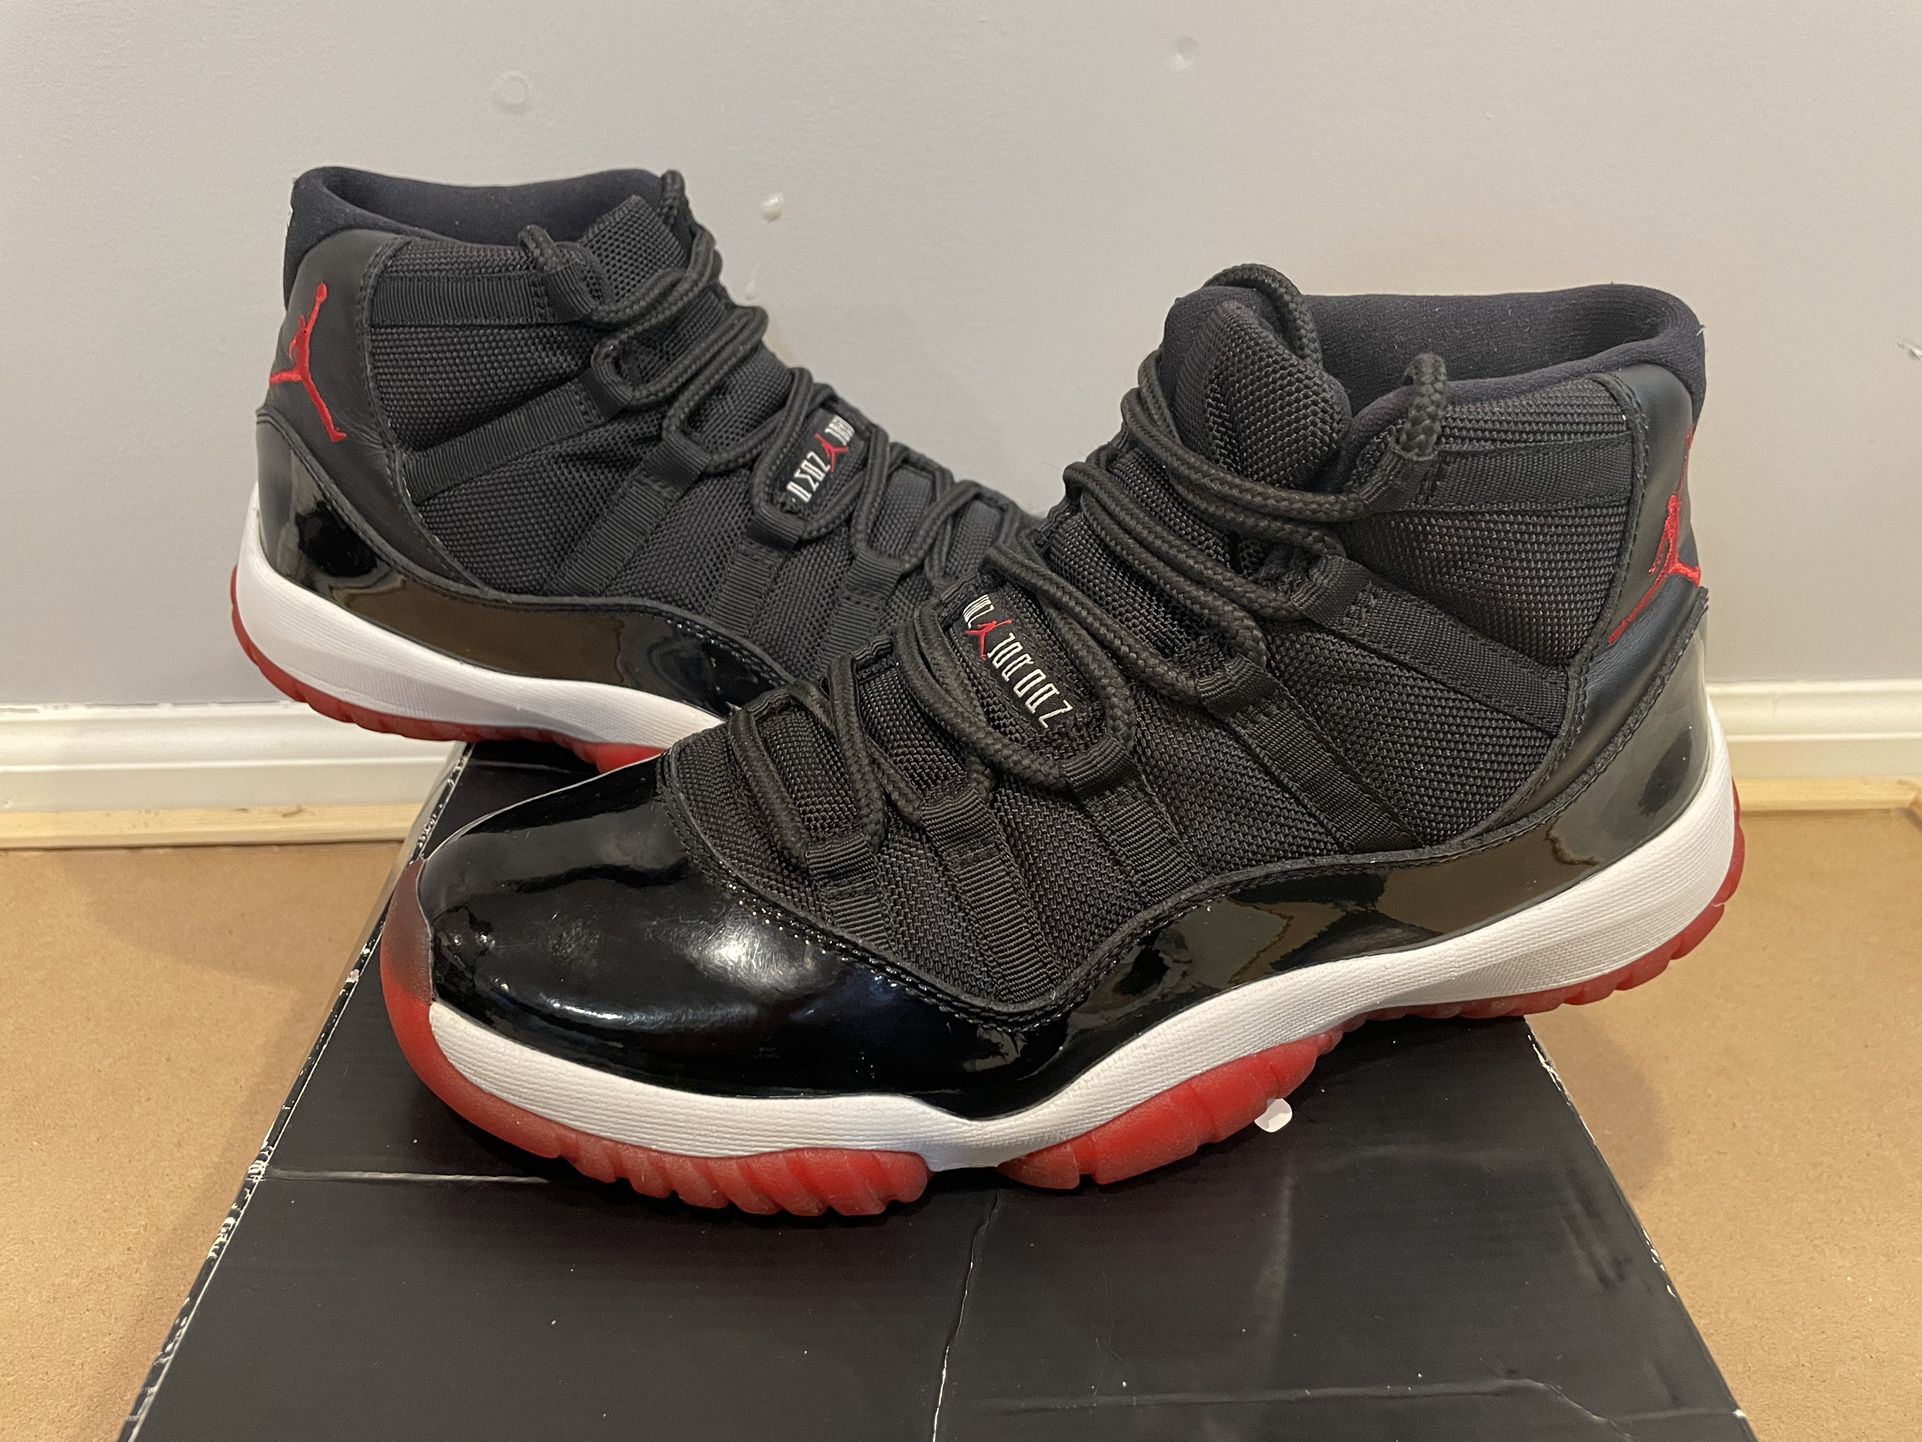 Jordan 11 for Sale, Authenticity Guaranteed